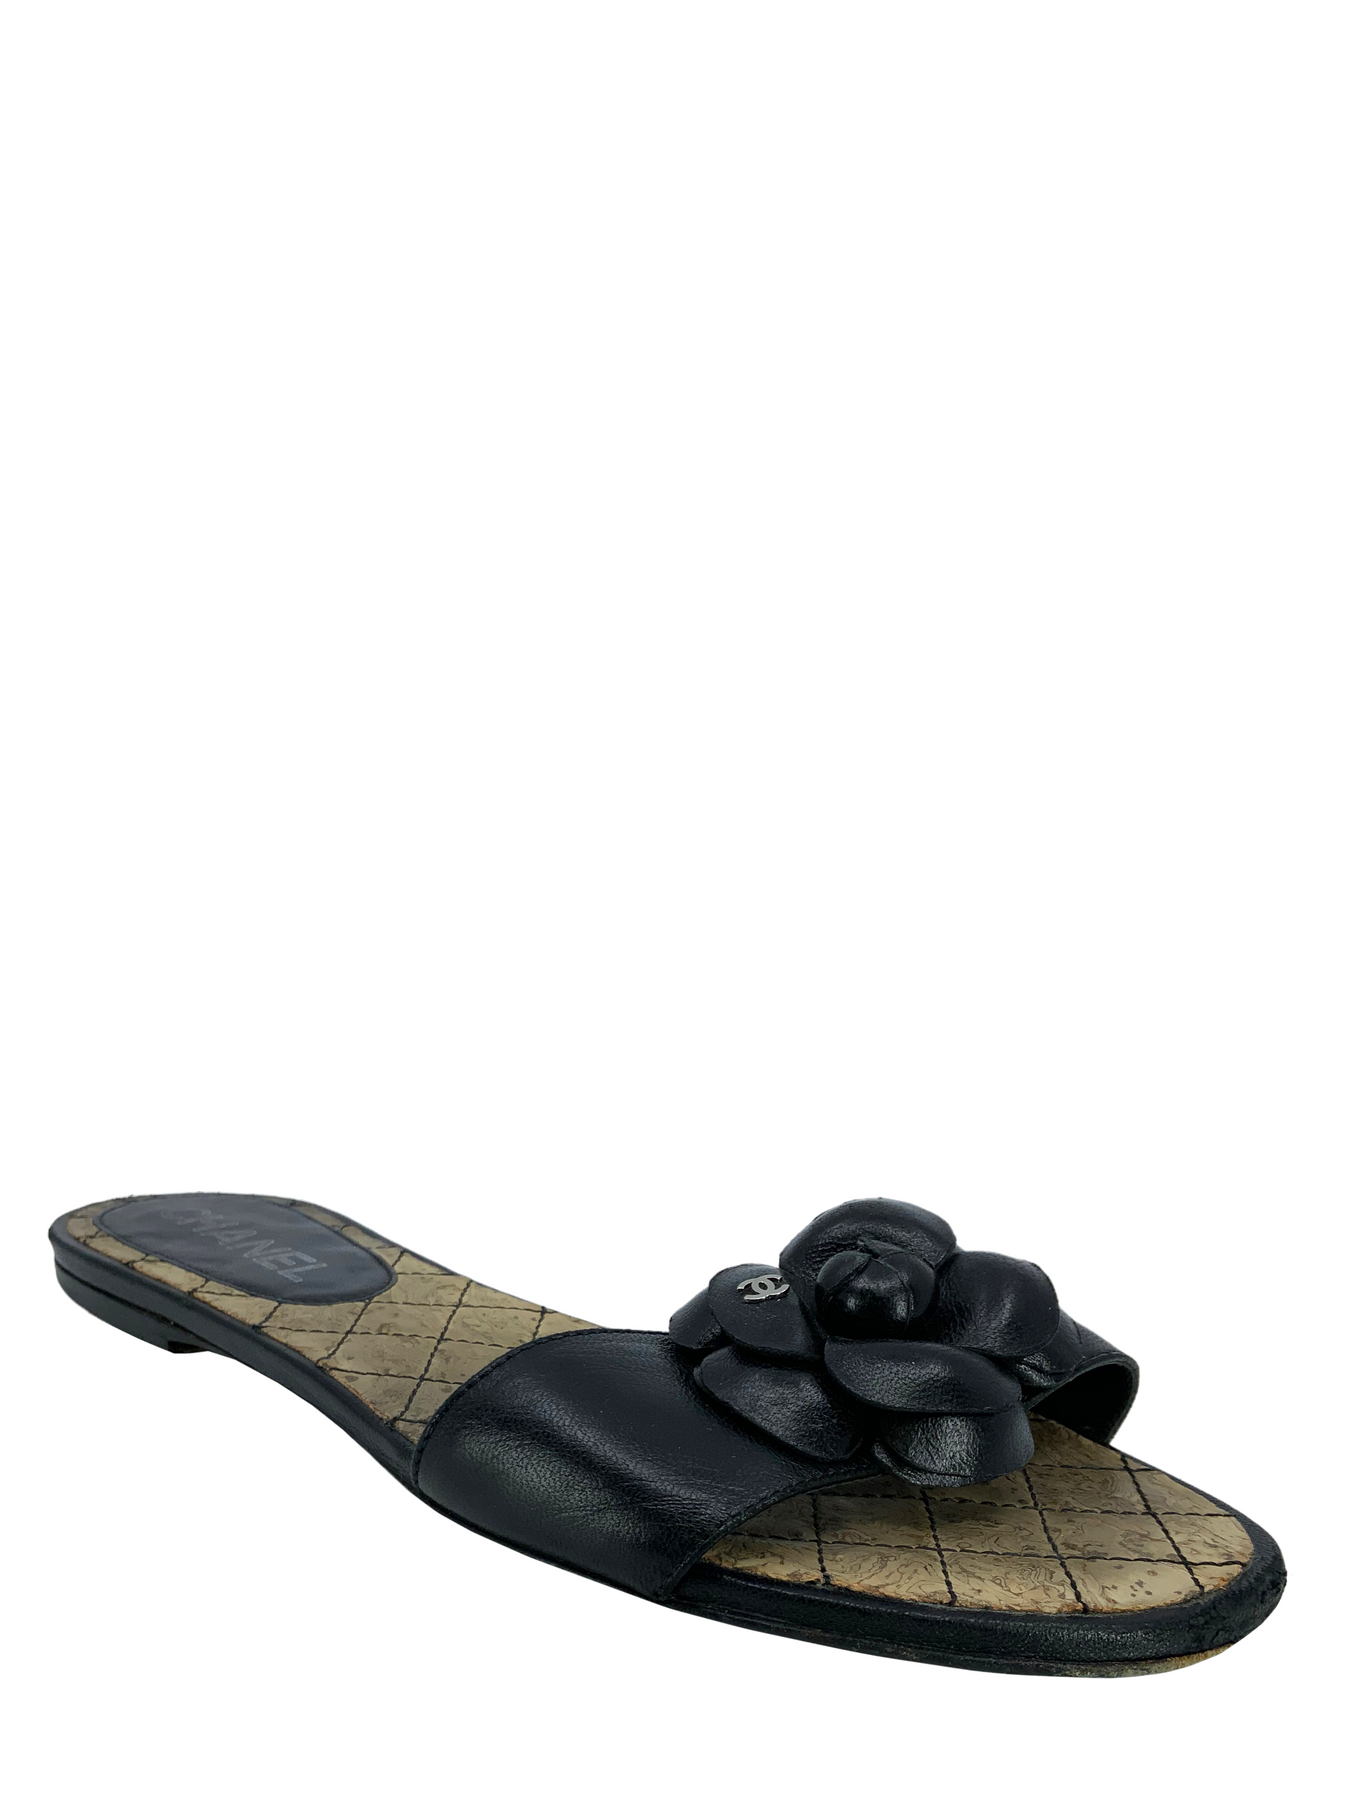 Chanel Leather Camellia Flower Flat Cork Sandals Size 7